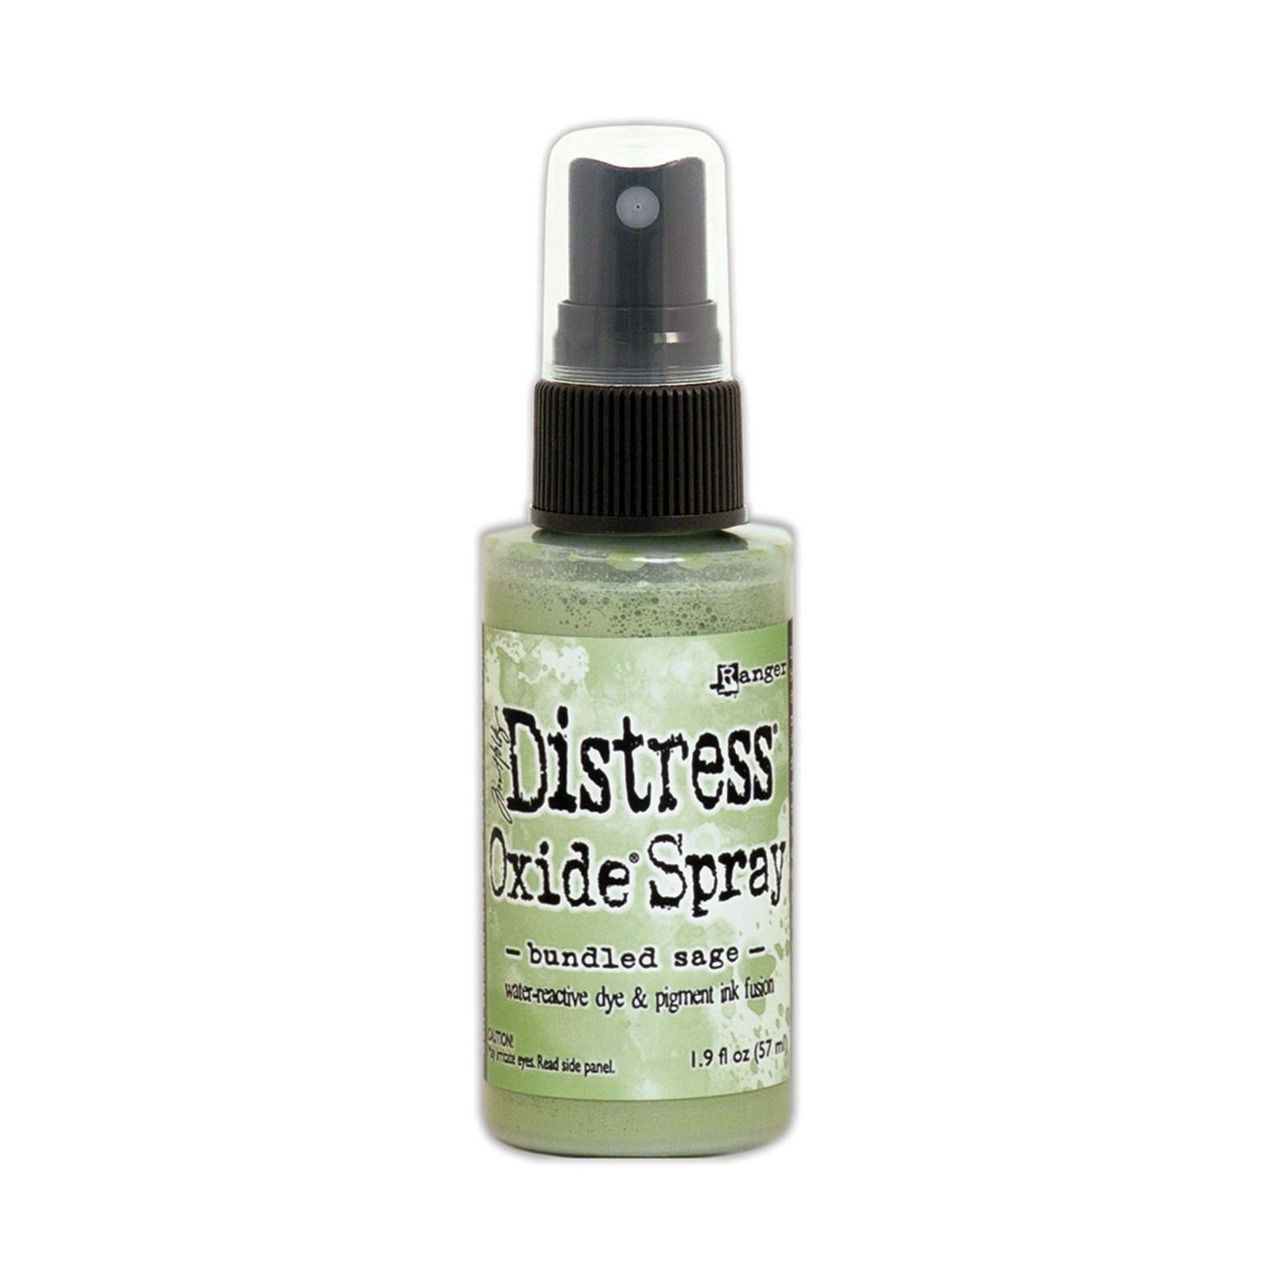 Distress spray oxide : Bundled sage